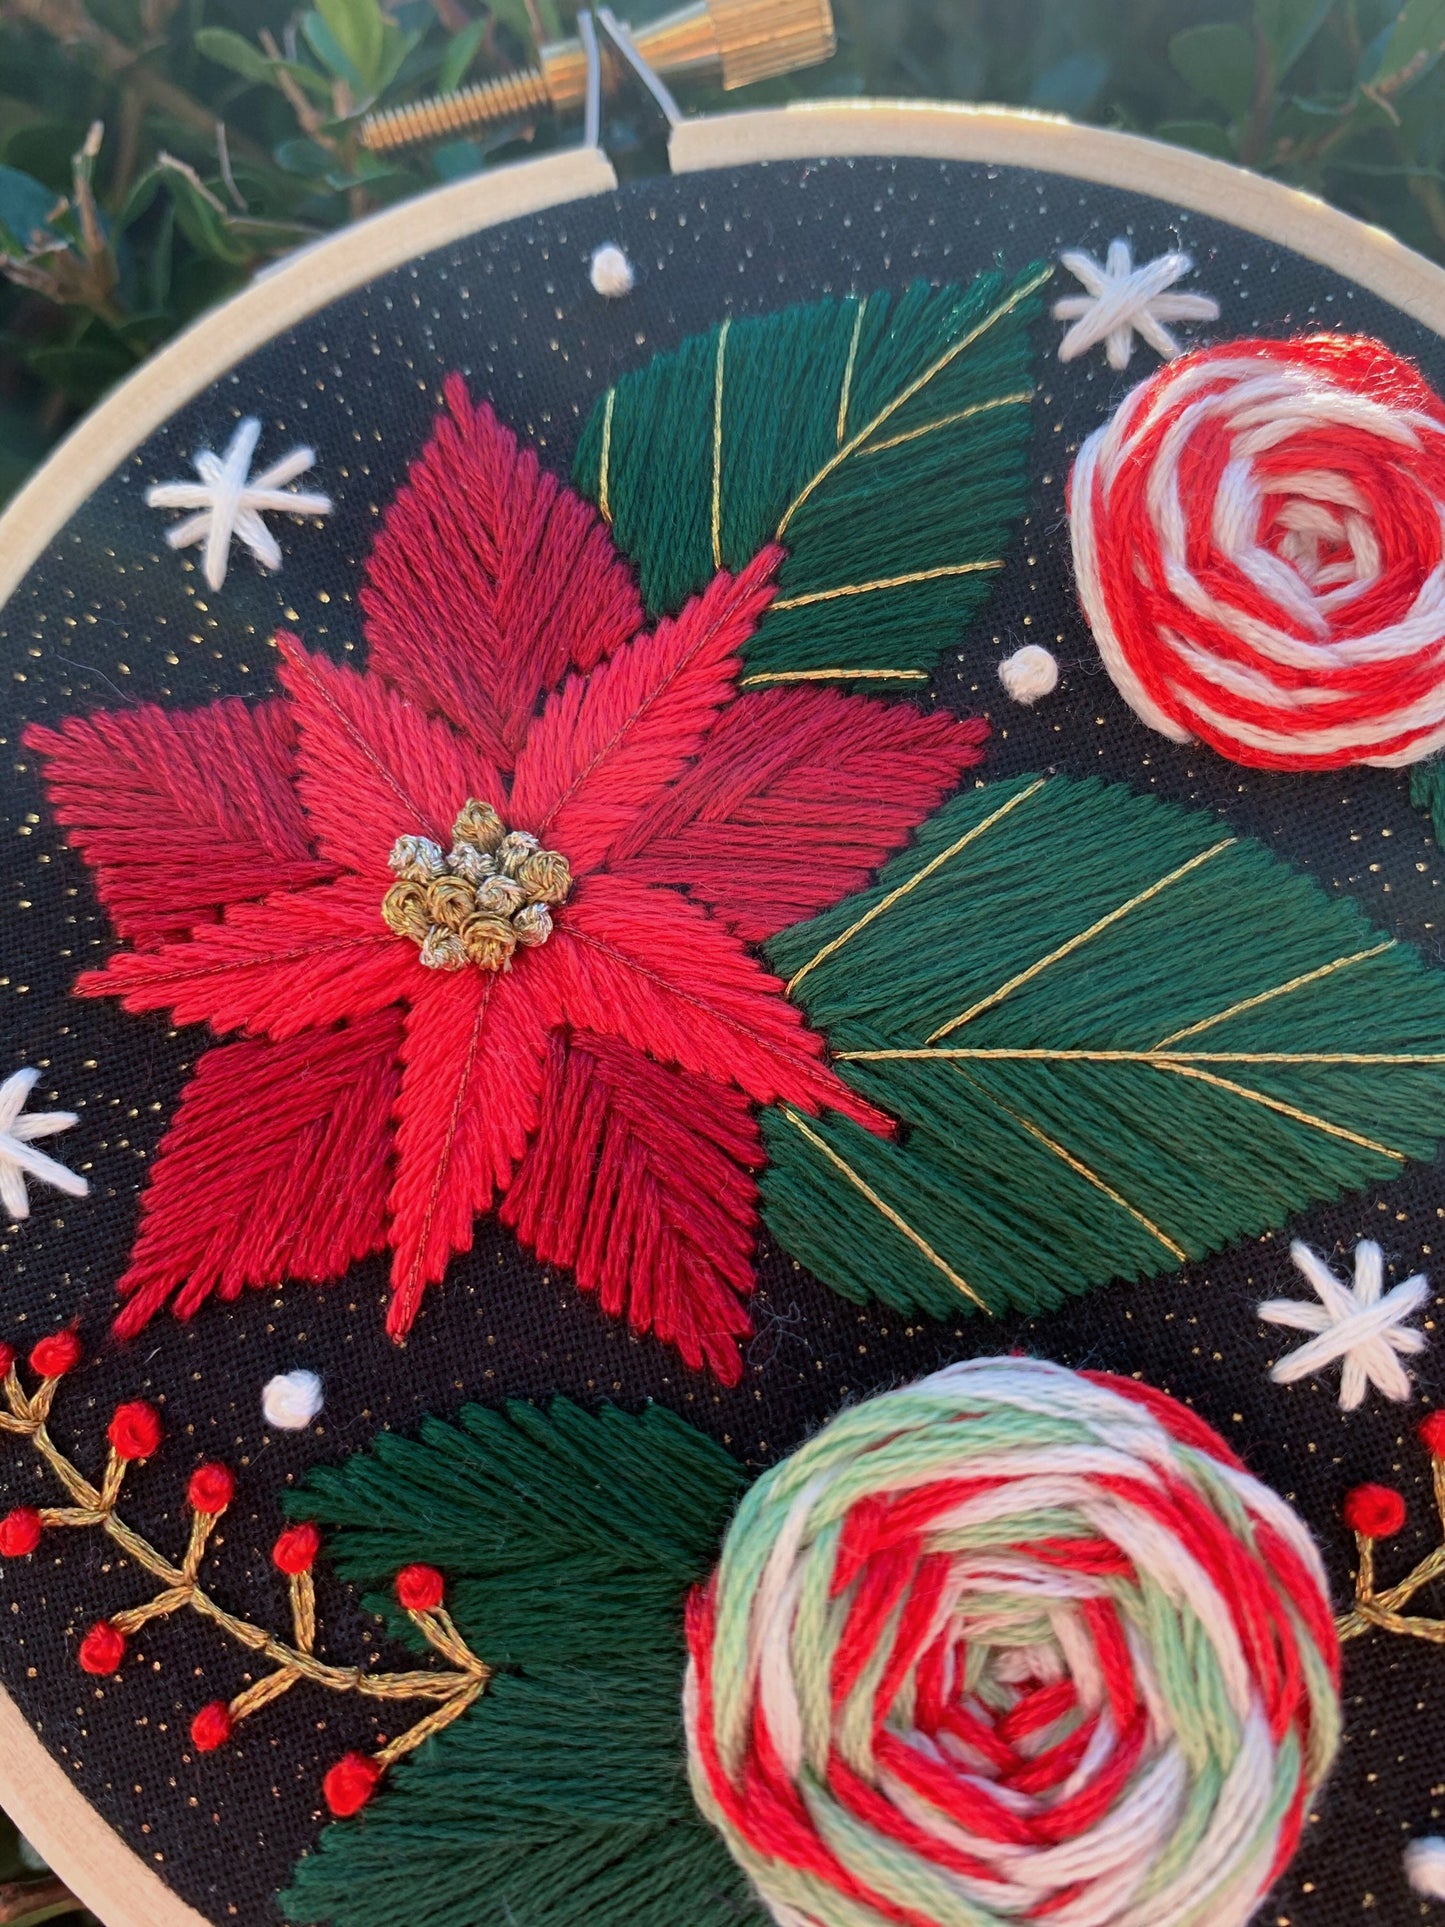 PDF Pattern - Christmas Florals, Intermediate Embroidery Pattern